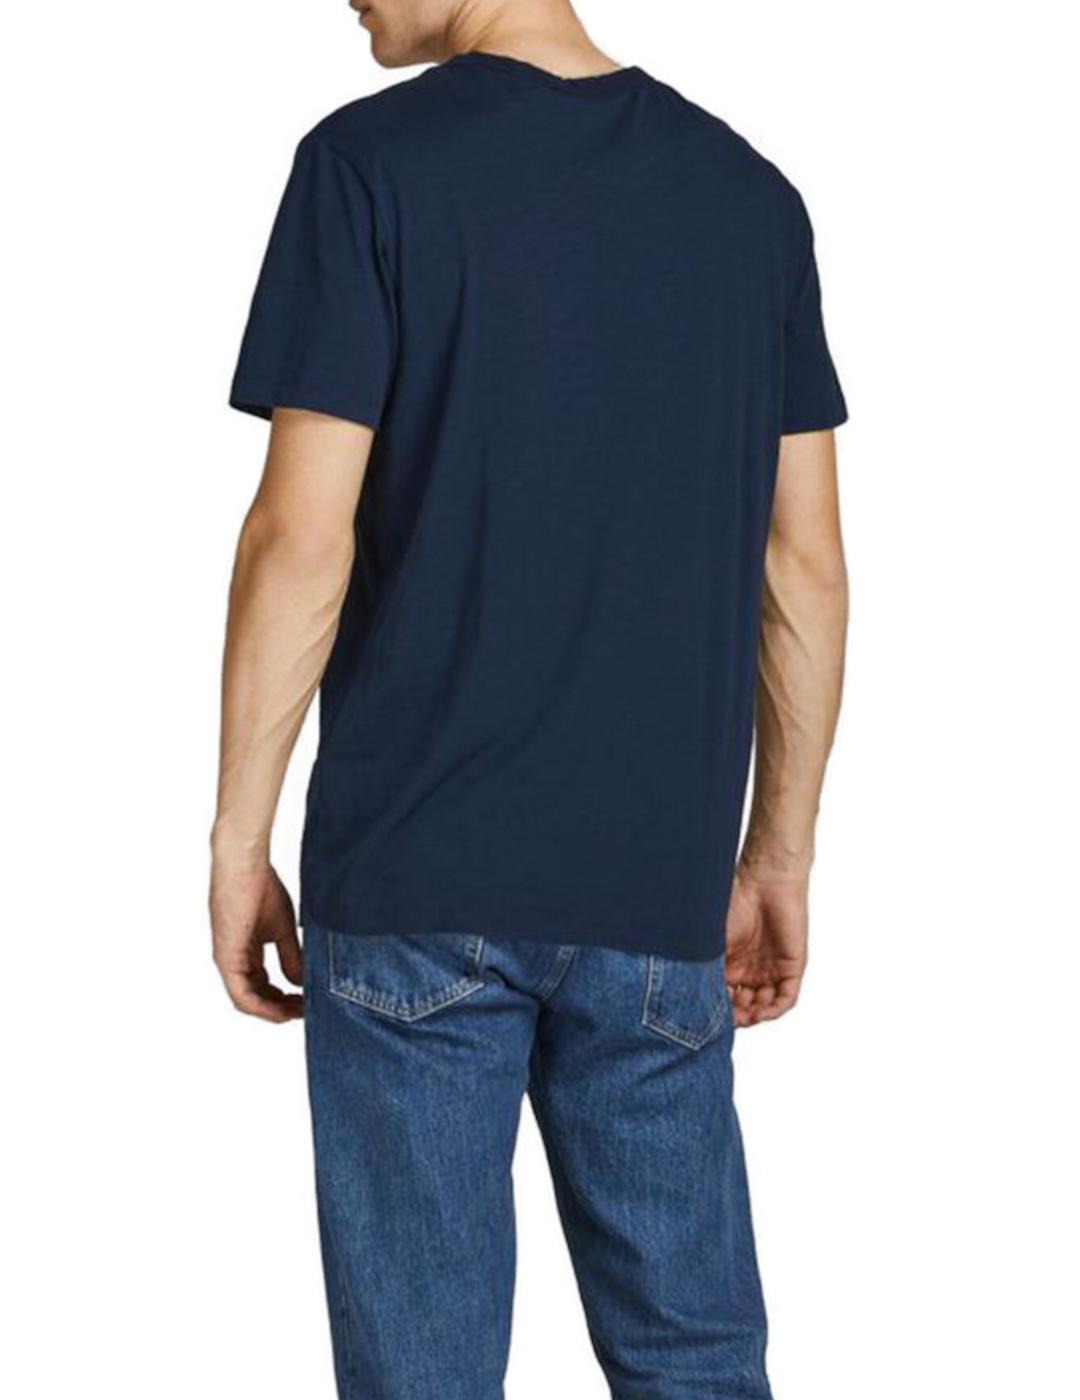 Camiseta Jack-jones marino para hombre-a